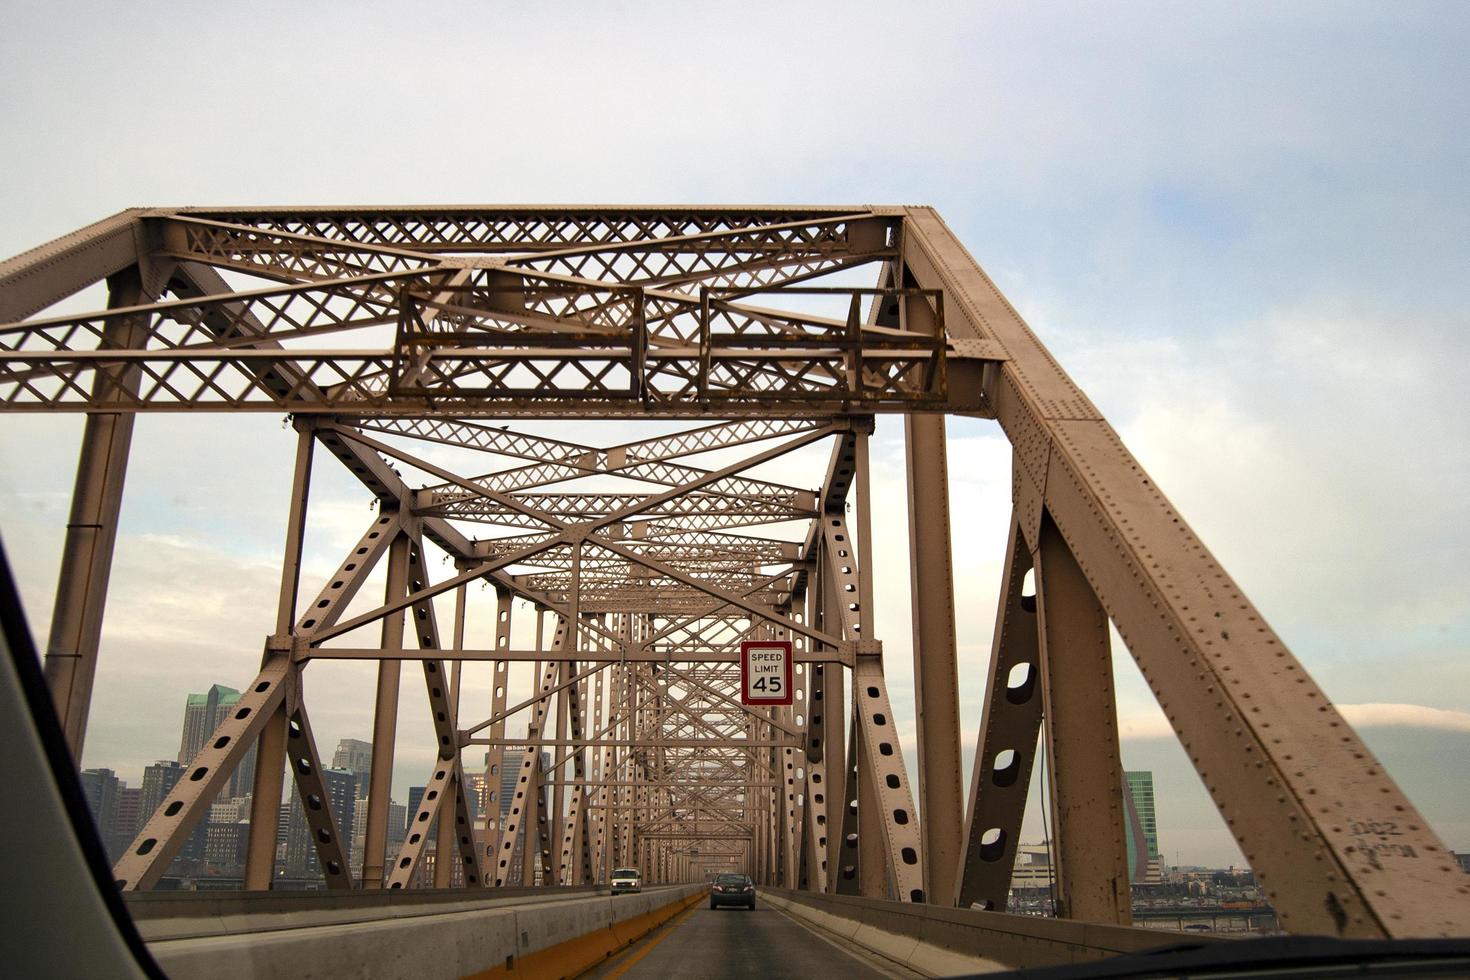 Cars driving on an old metal bridge photo